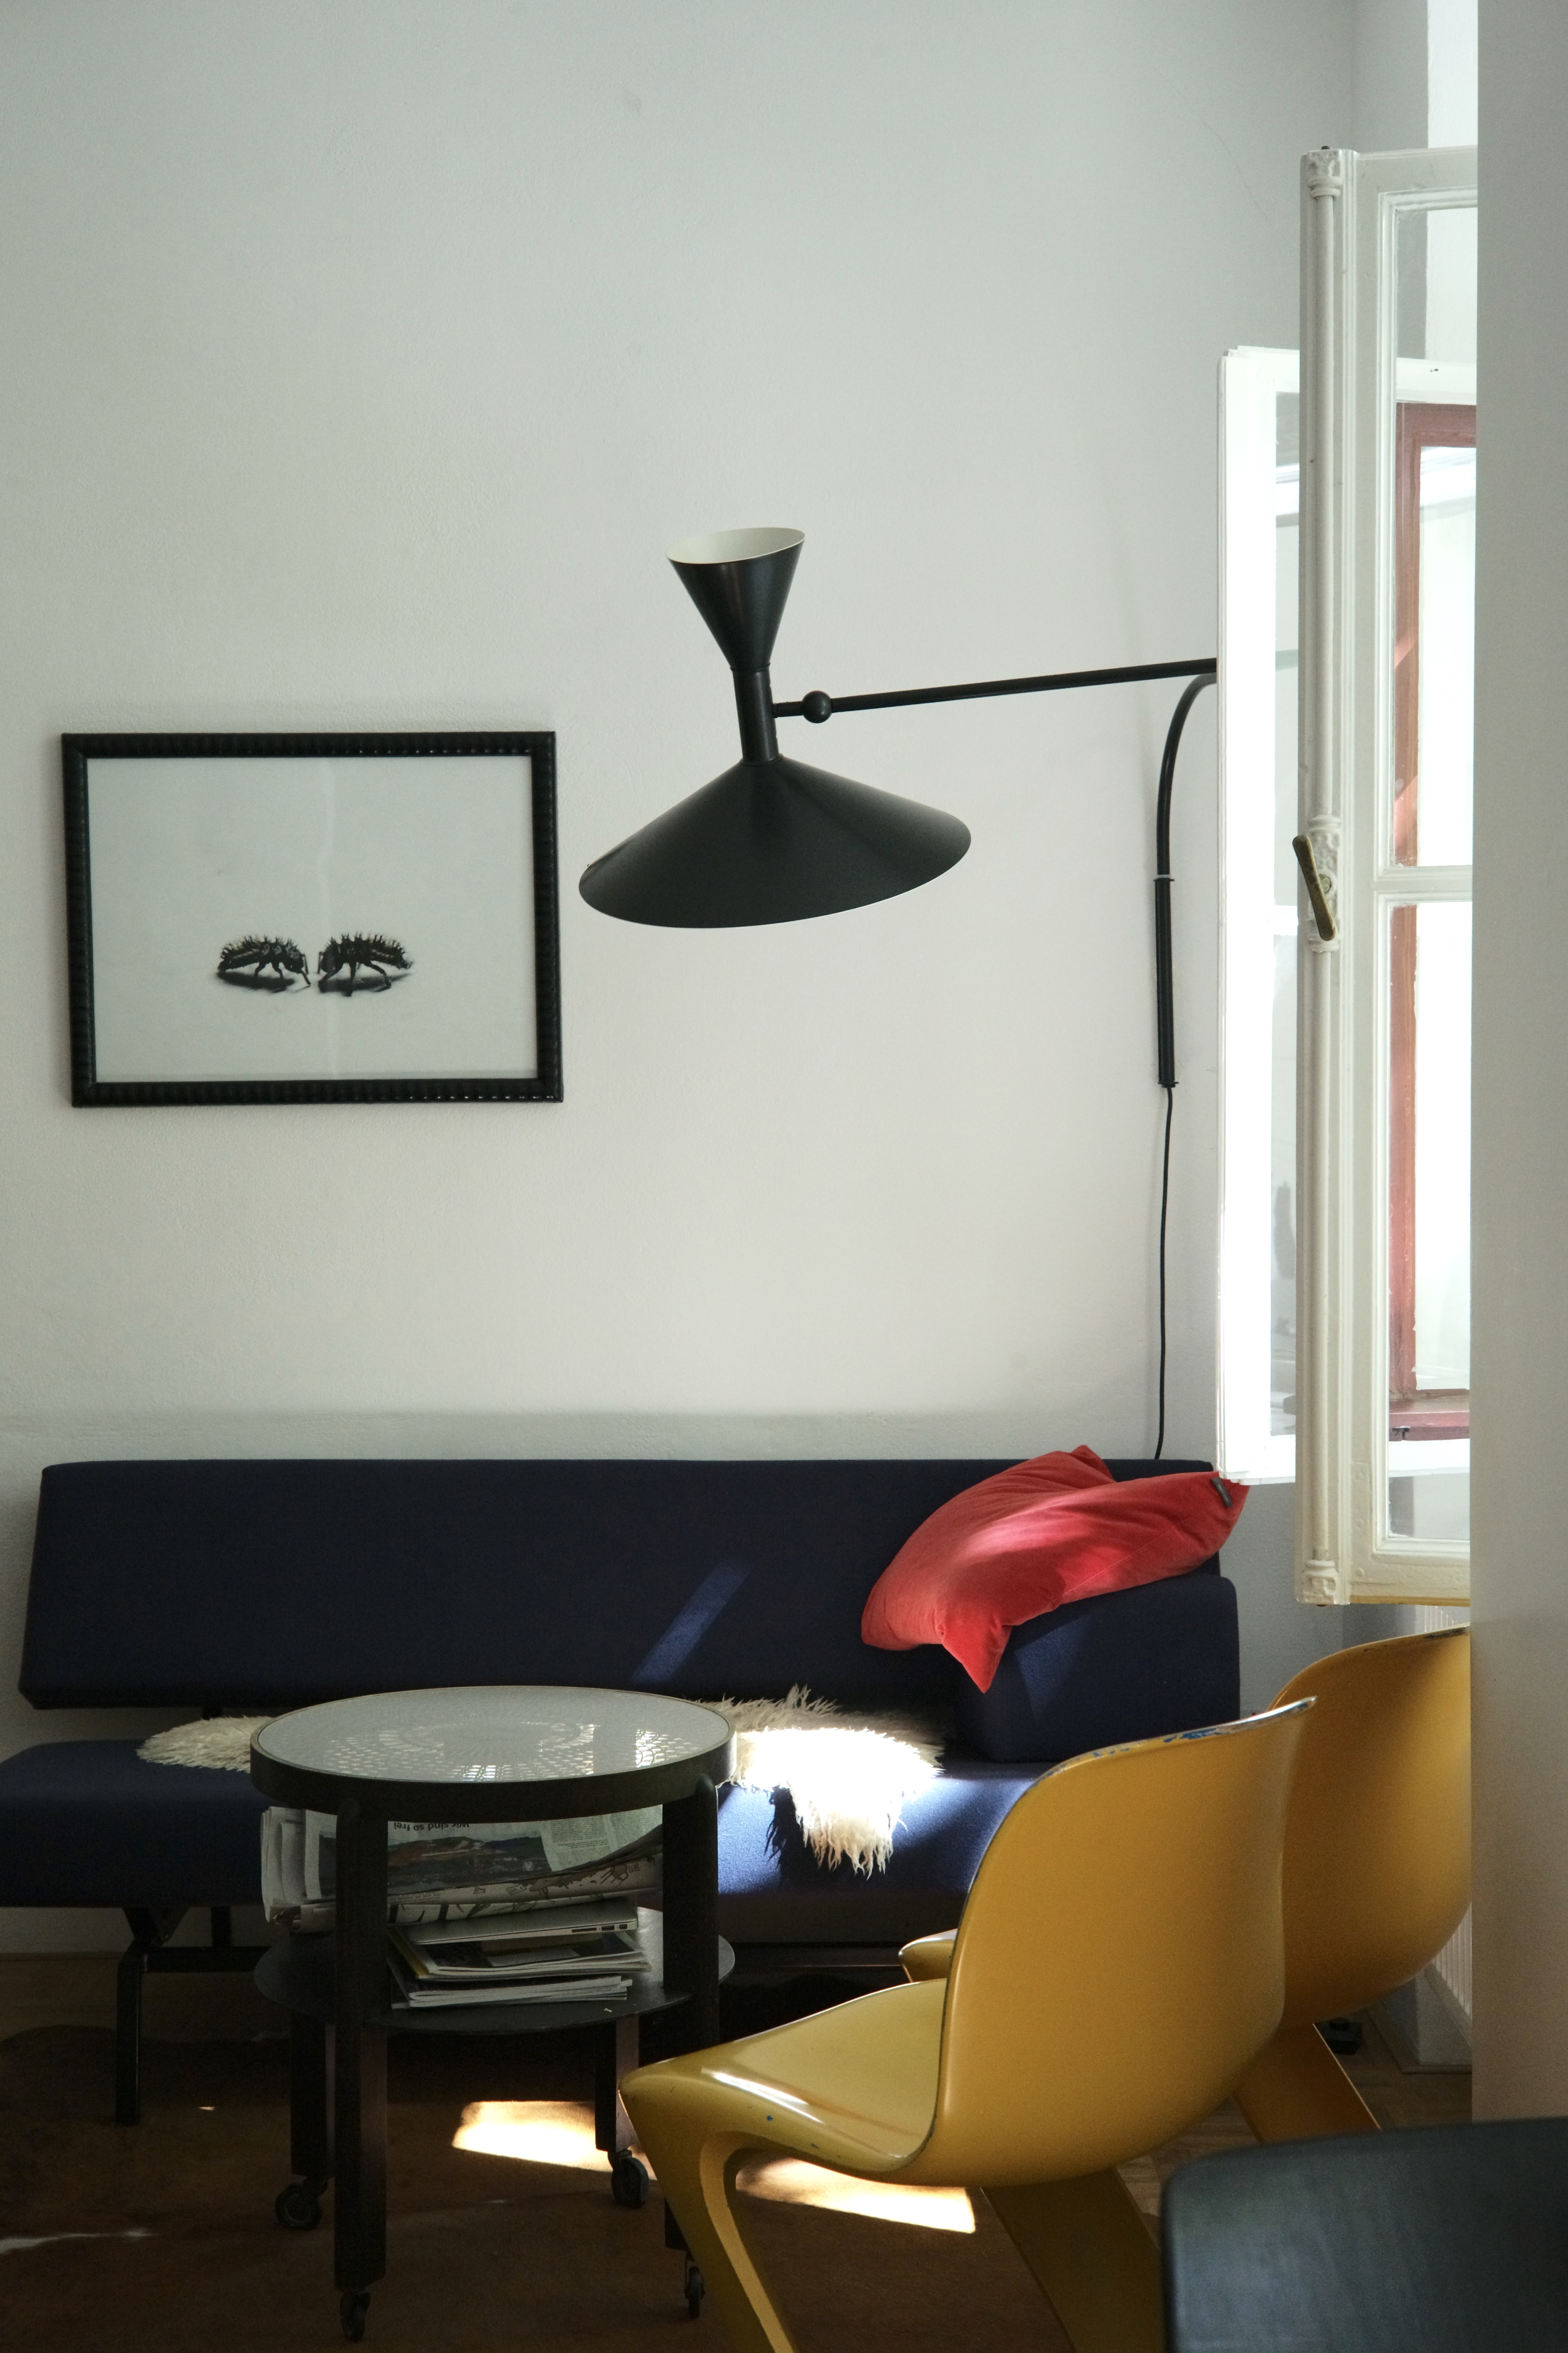 lamp de marseille, Le Corbusier, Luis Weiland art